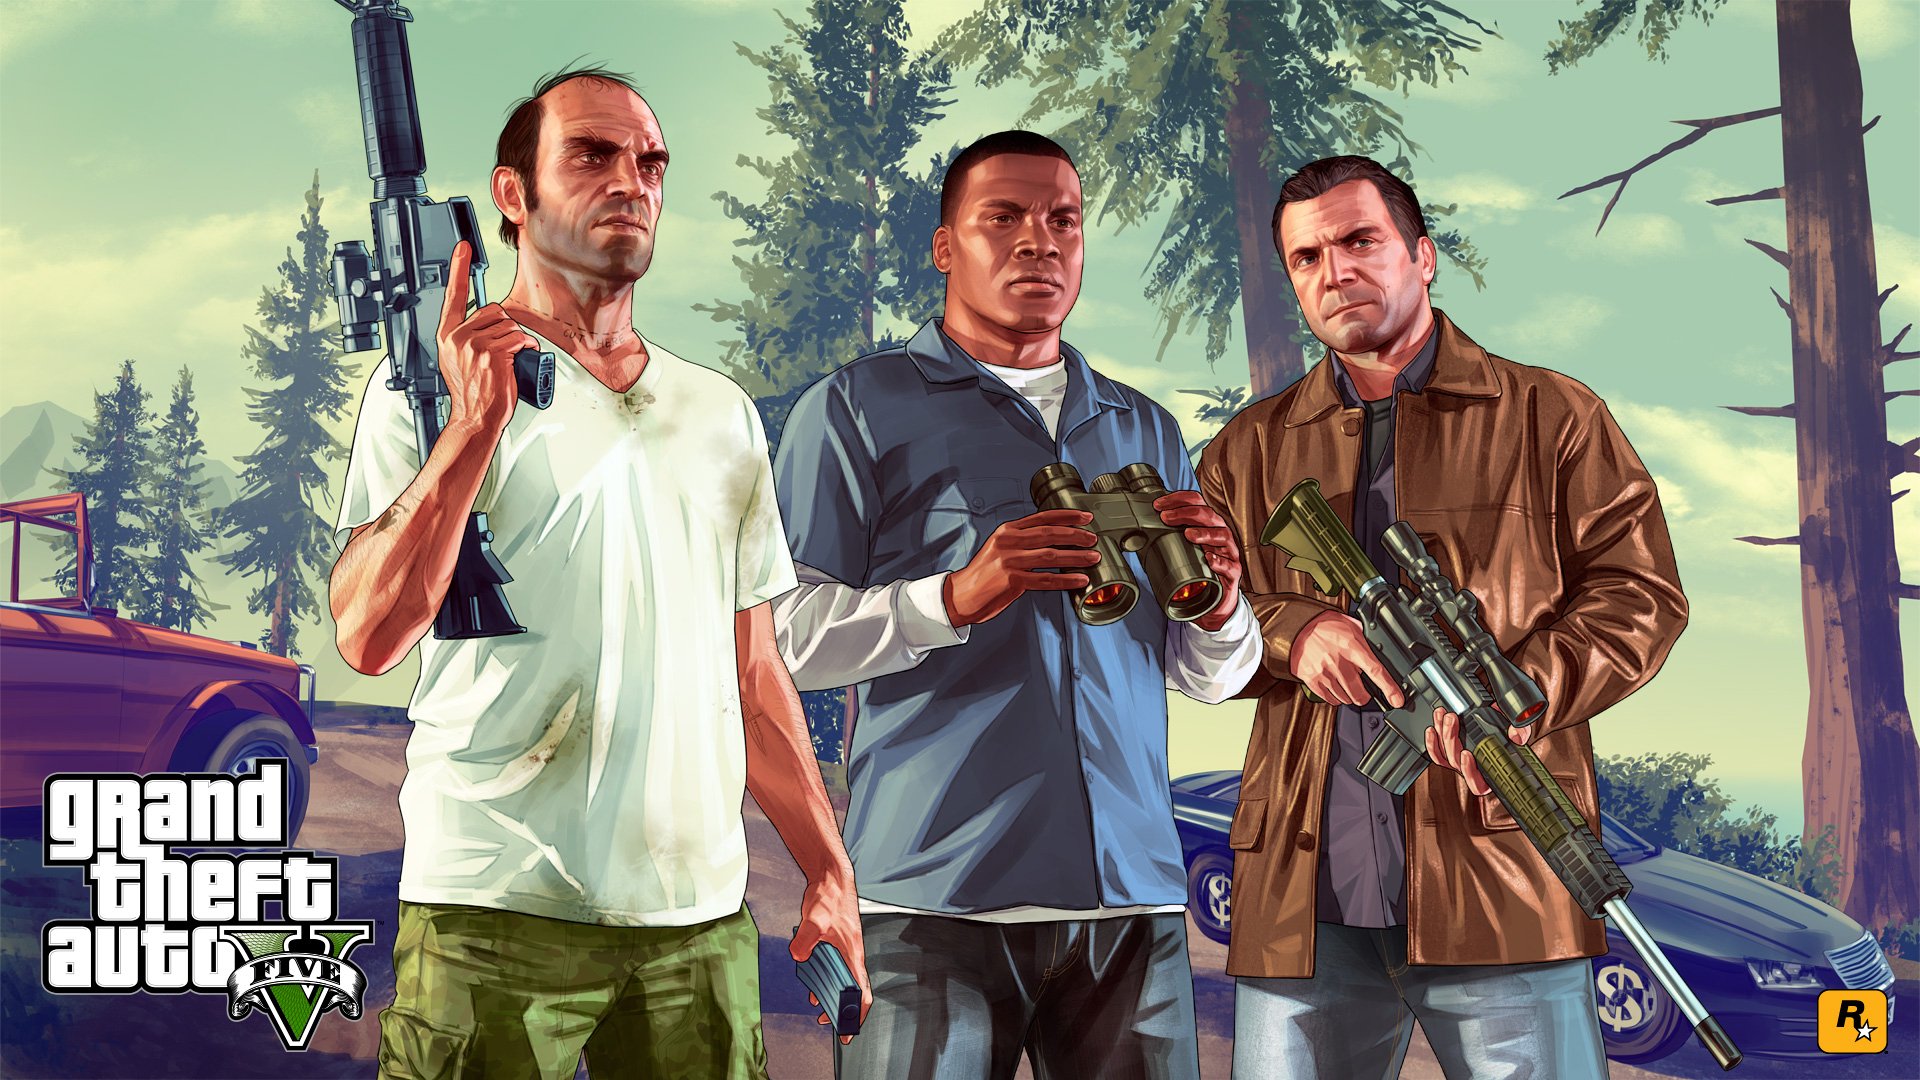 Grand Theft Auto promo image